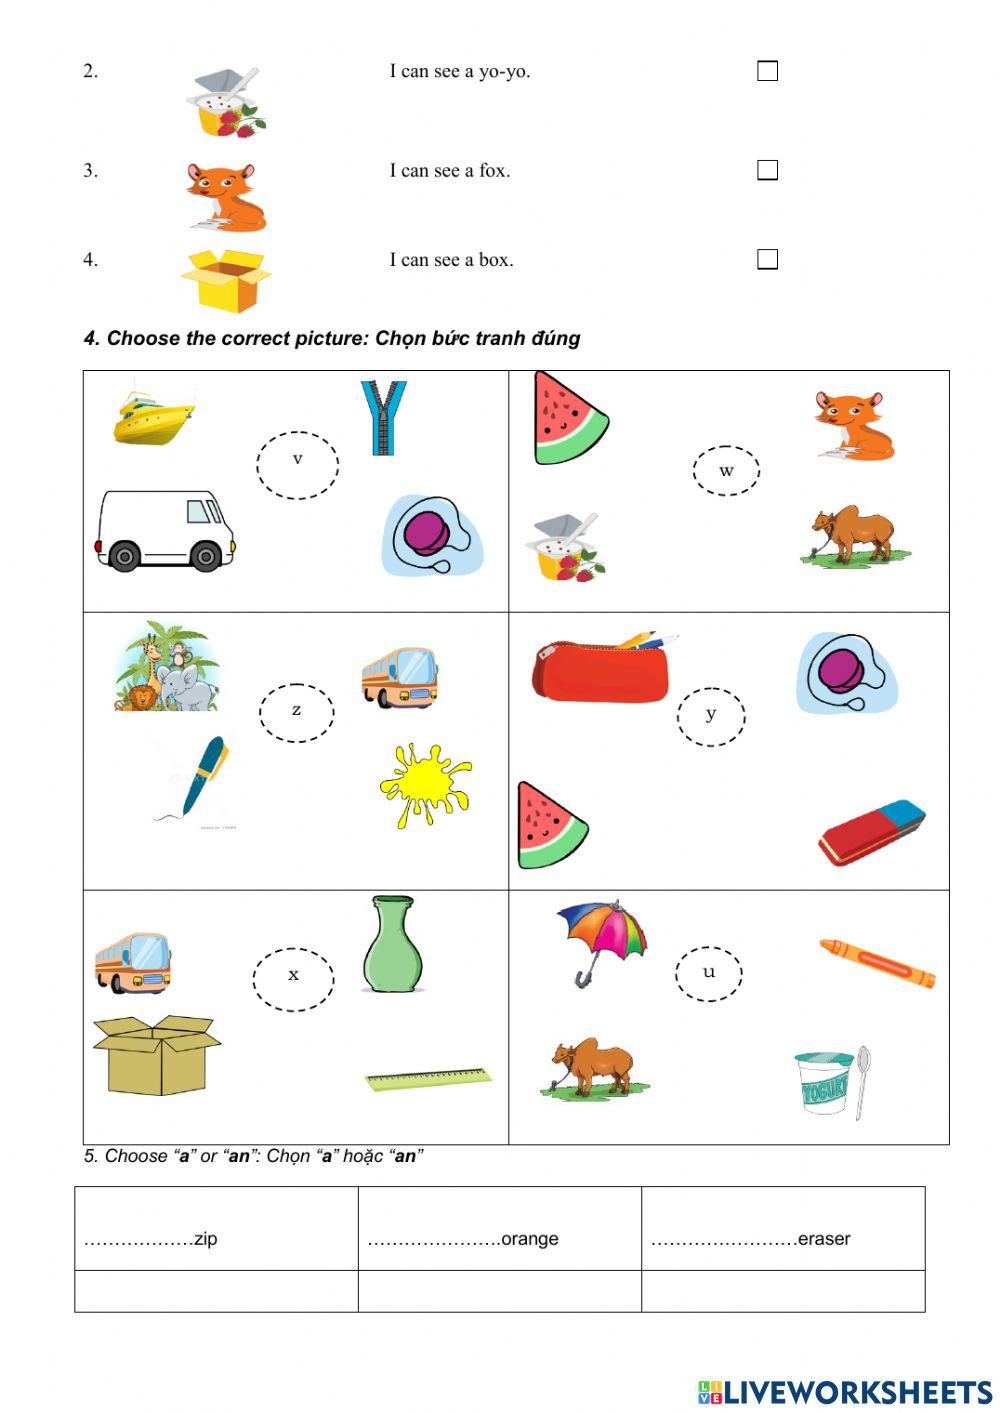 Writing Test interactive worksheet for grade 2 | Live Worksheets